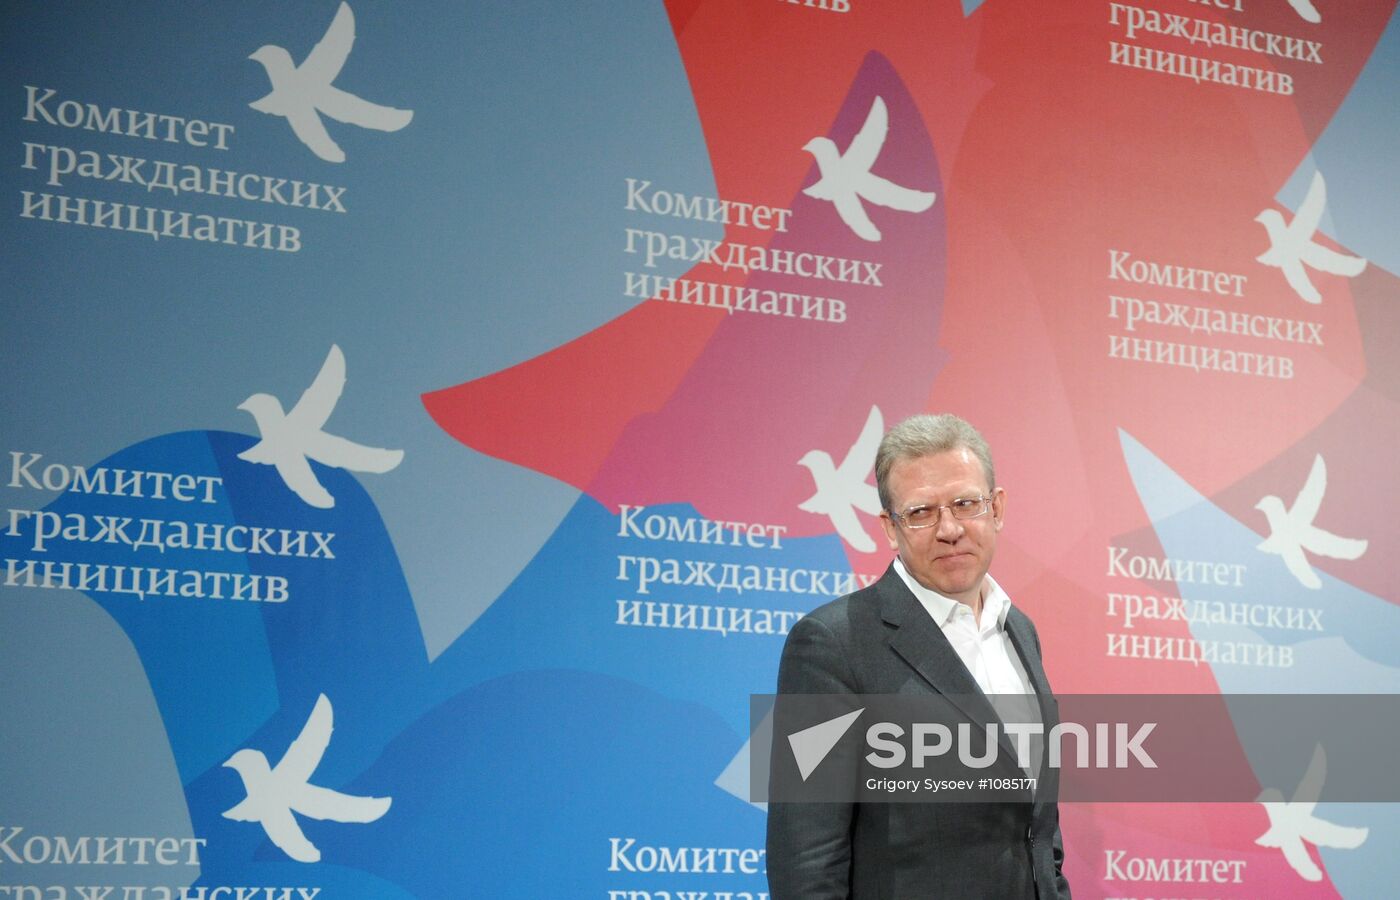 Alexei Kudrin gives news conference